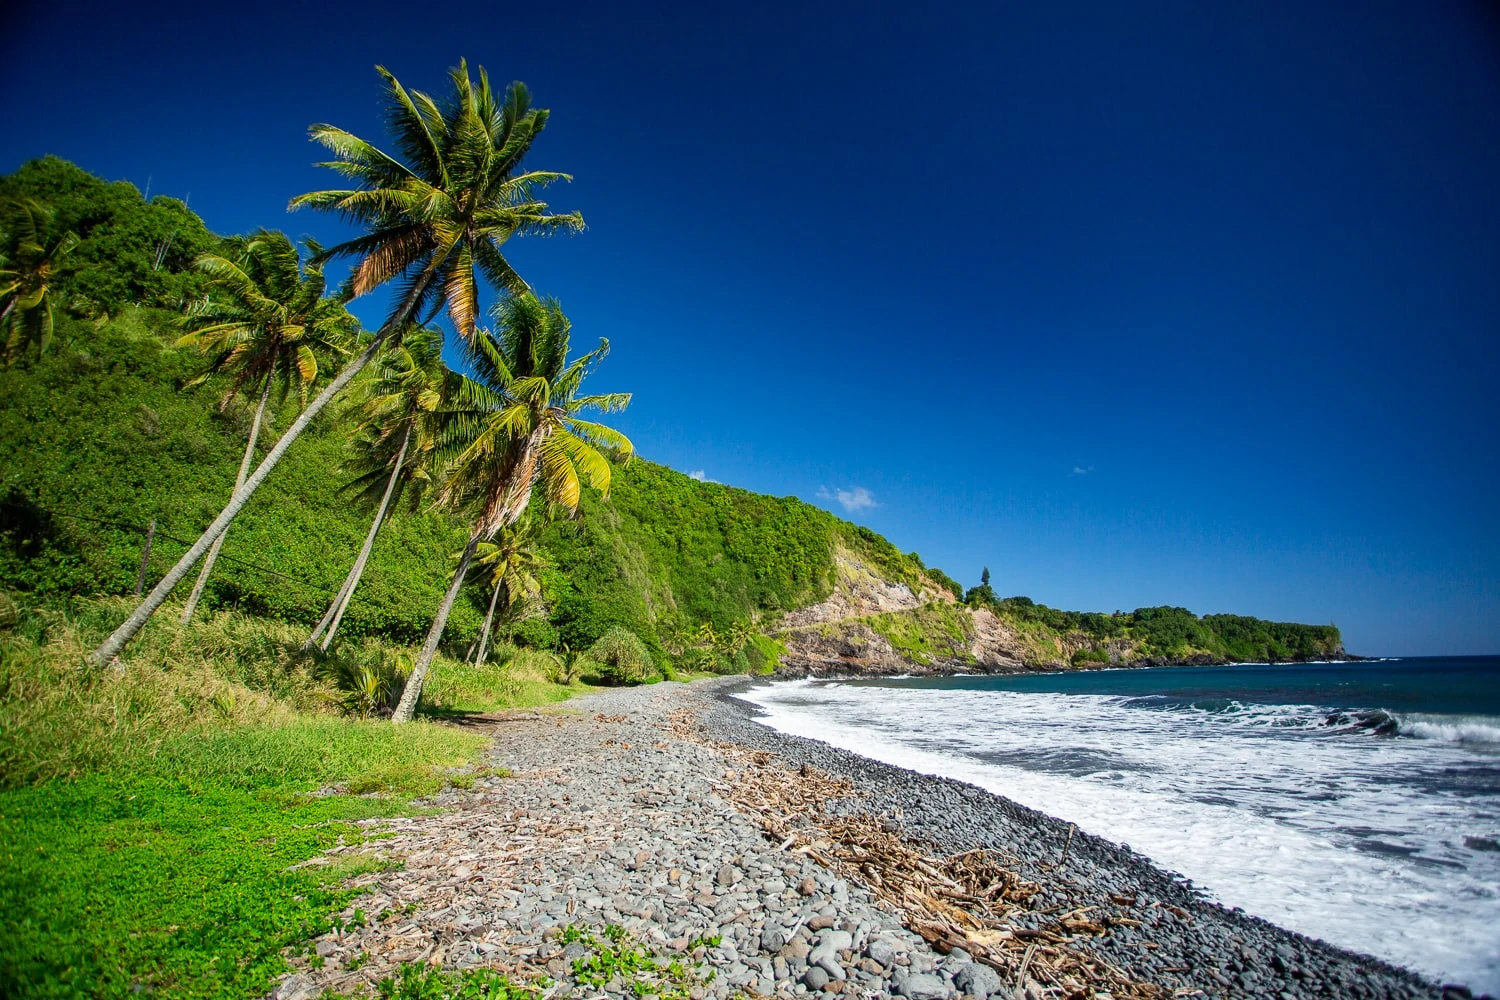 A pebble beach on Maui with blue sky and swaying palm trees.